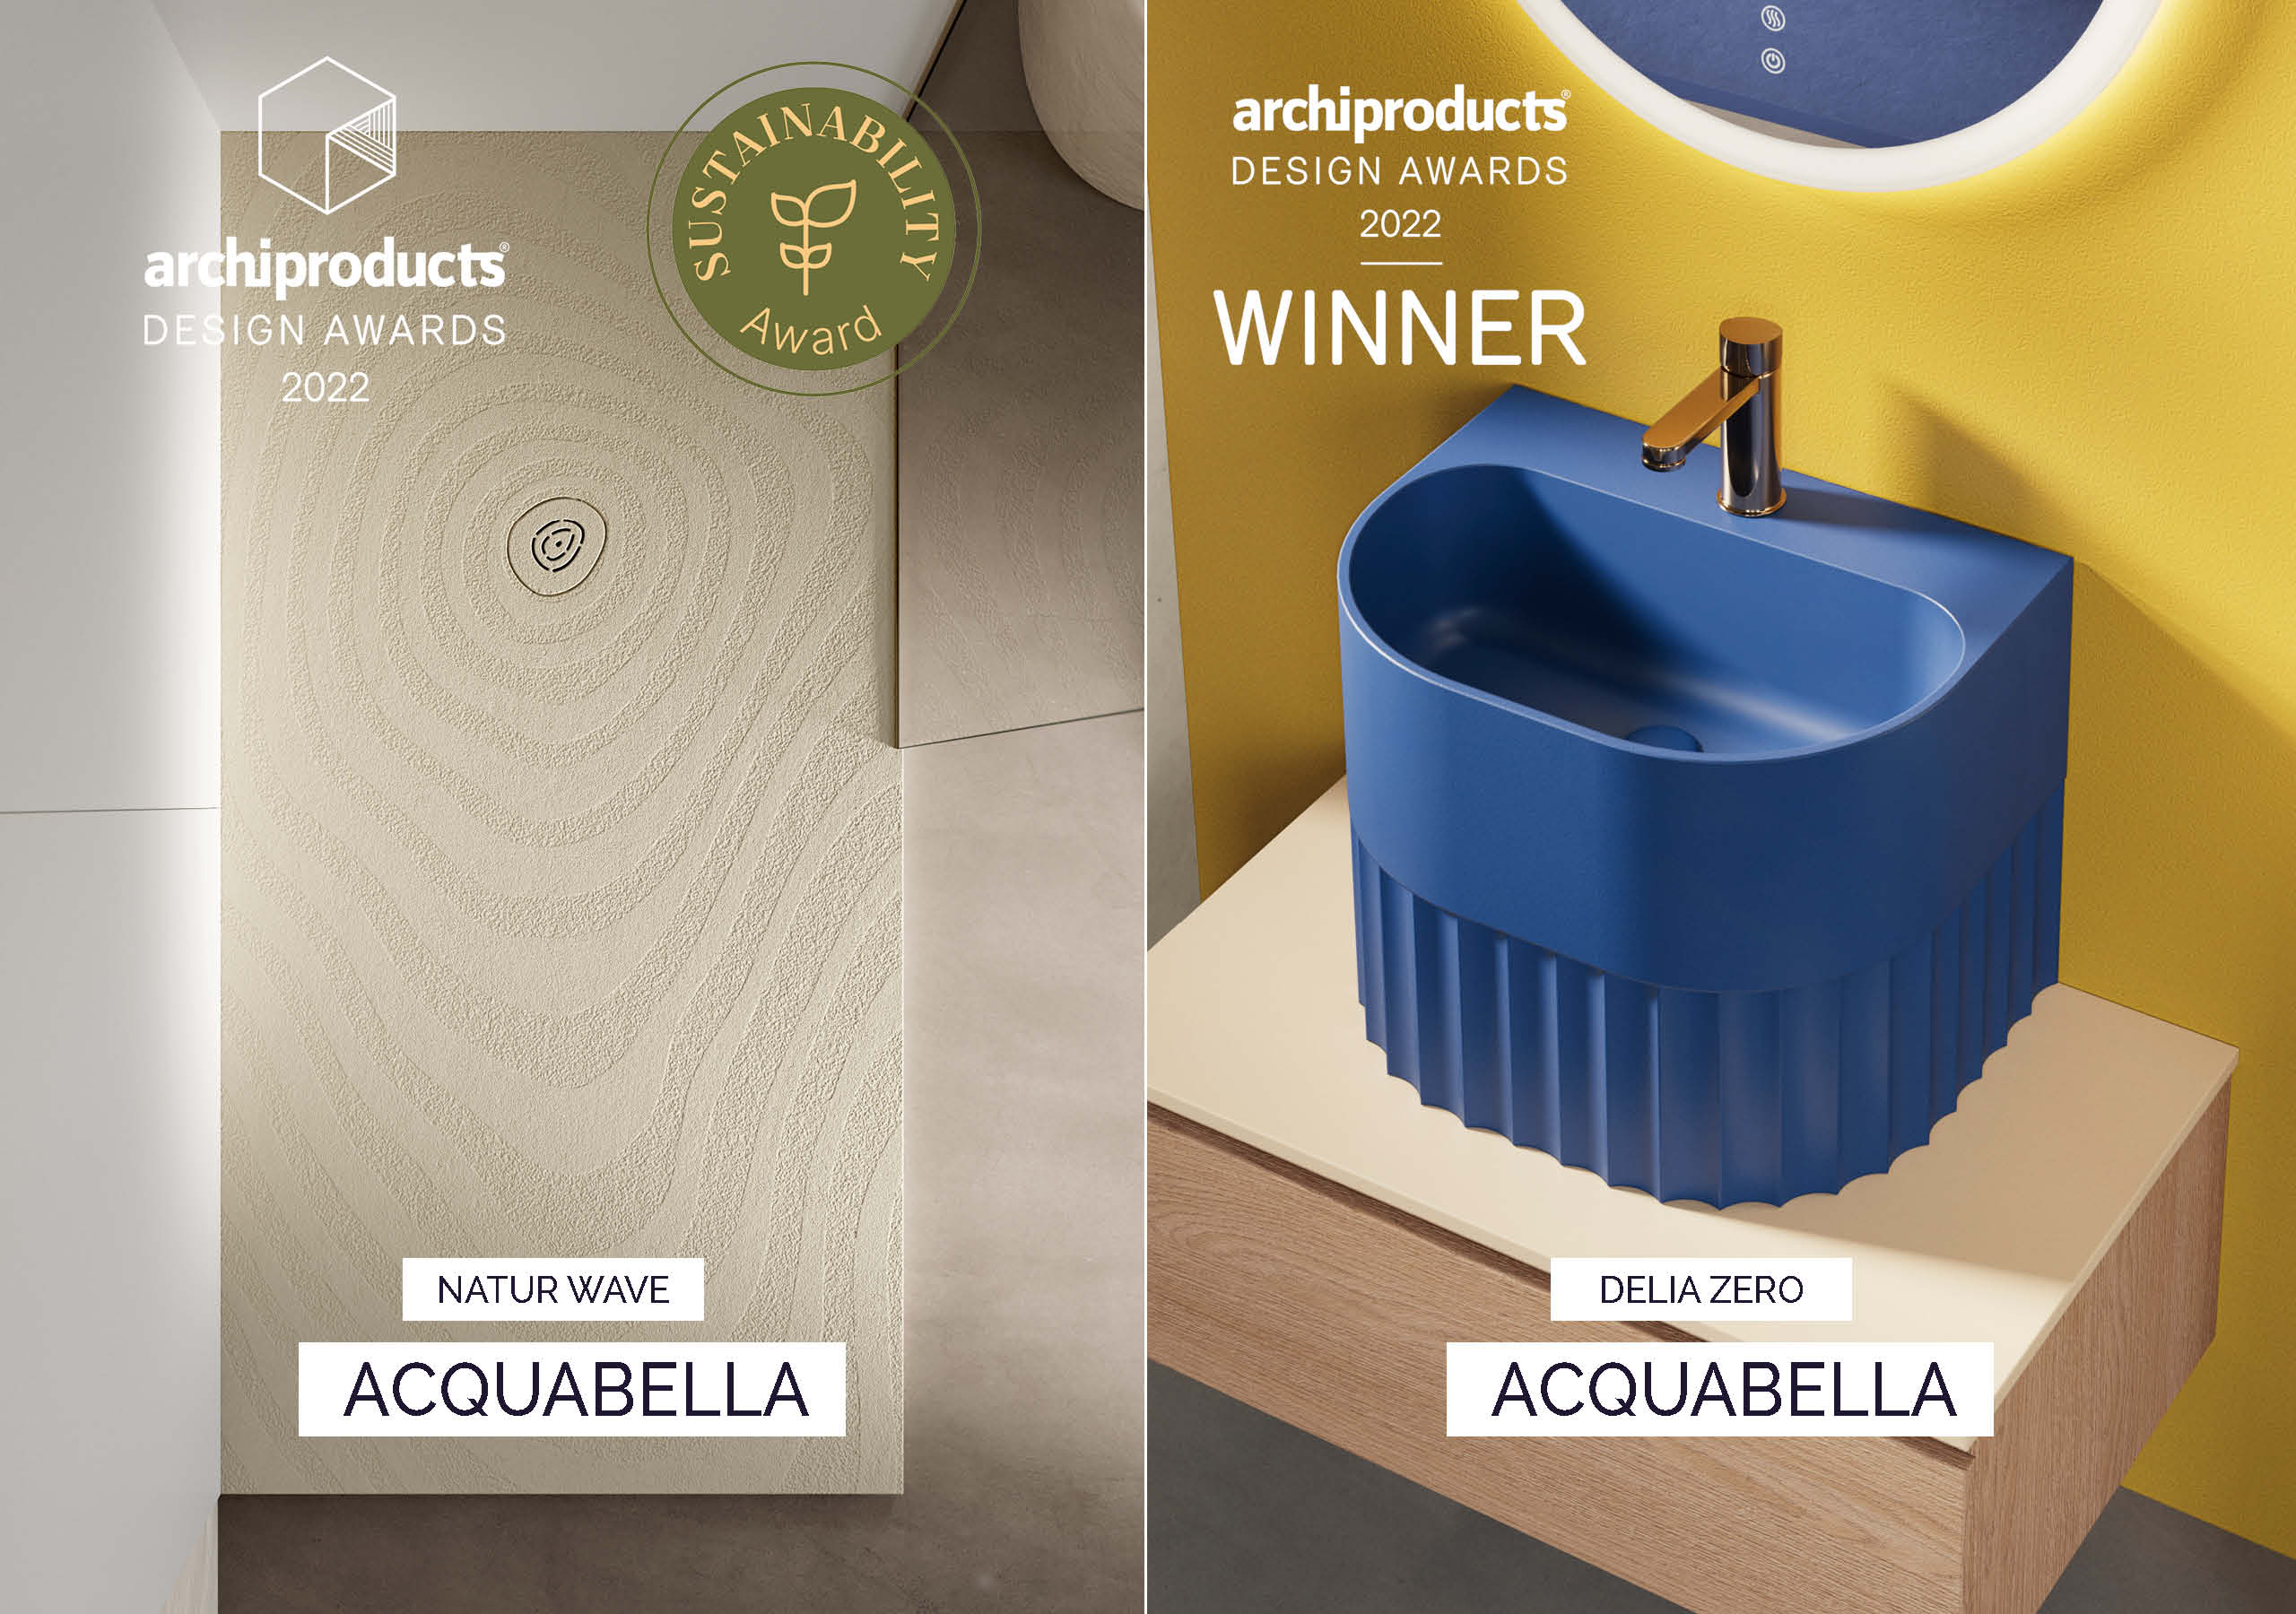 Acquabella, ganadora de dos Archiproducts Design Awards